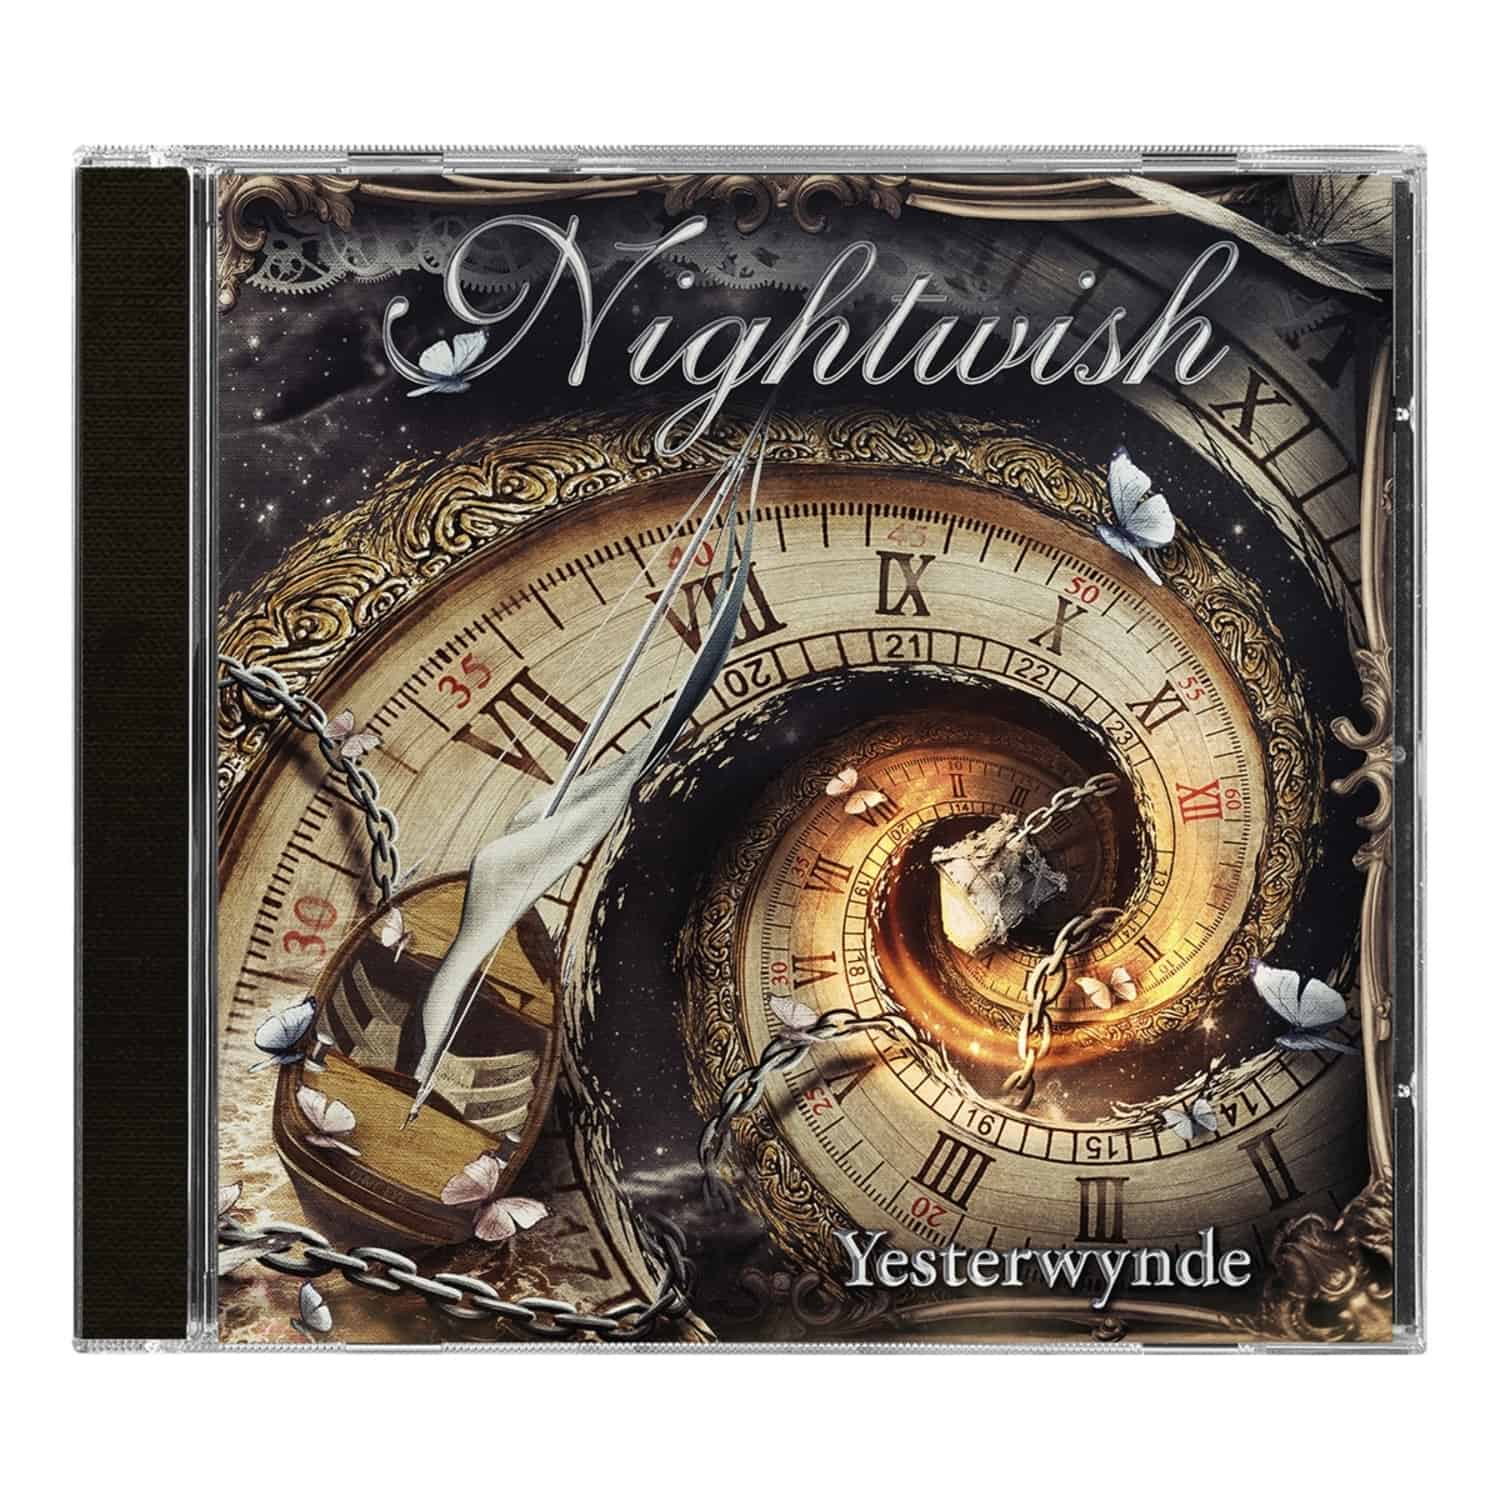 Nightwish - YESTERWYNDE